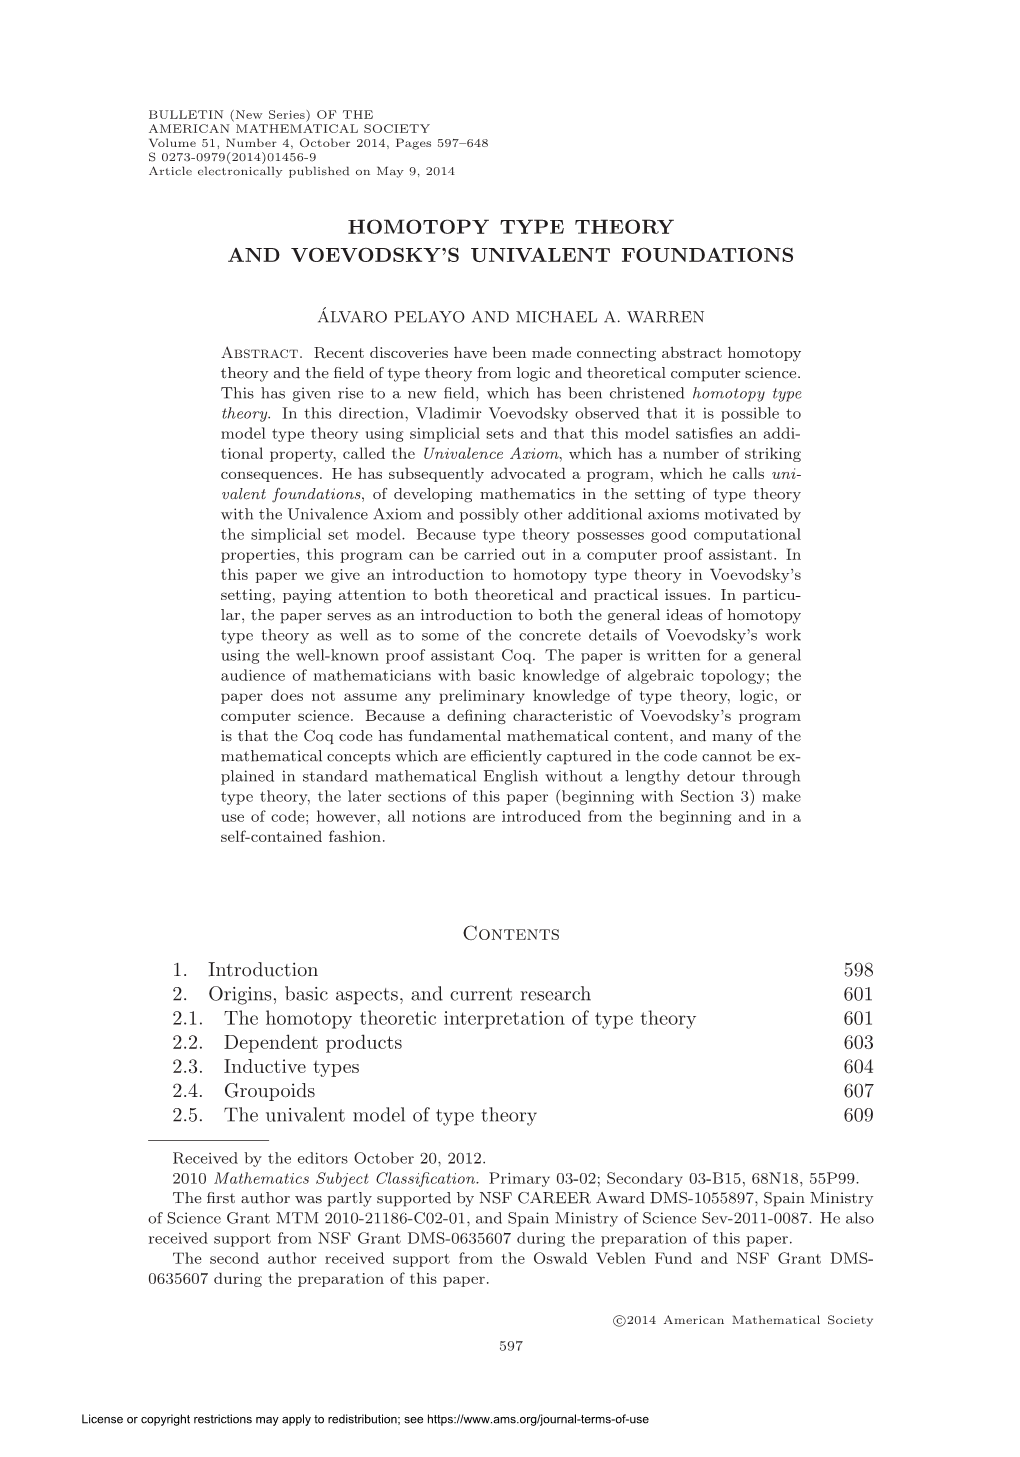 Homotopy Type Theory and Voevodsky's Univalent Foundations